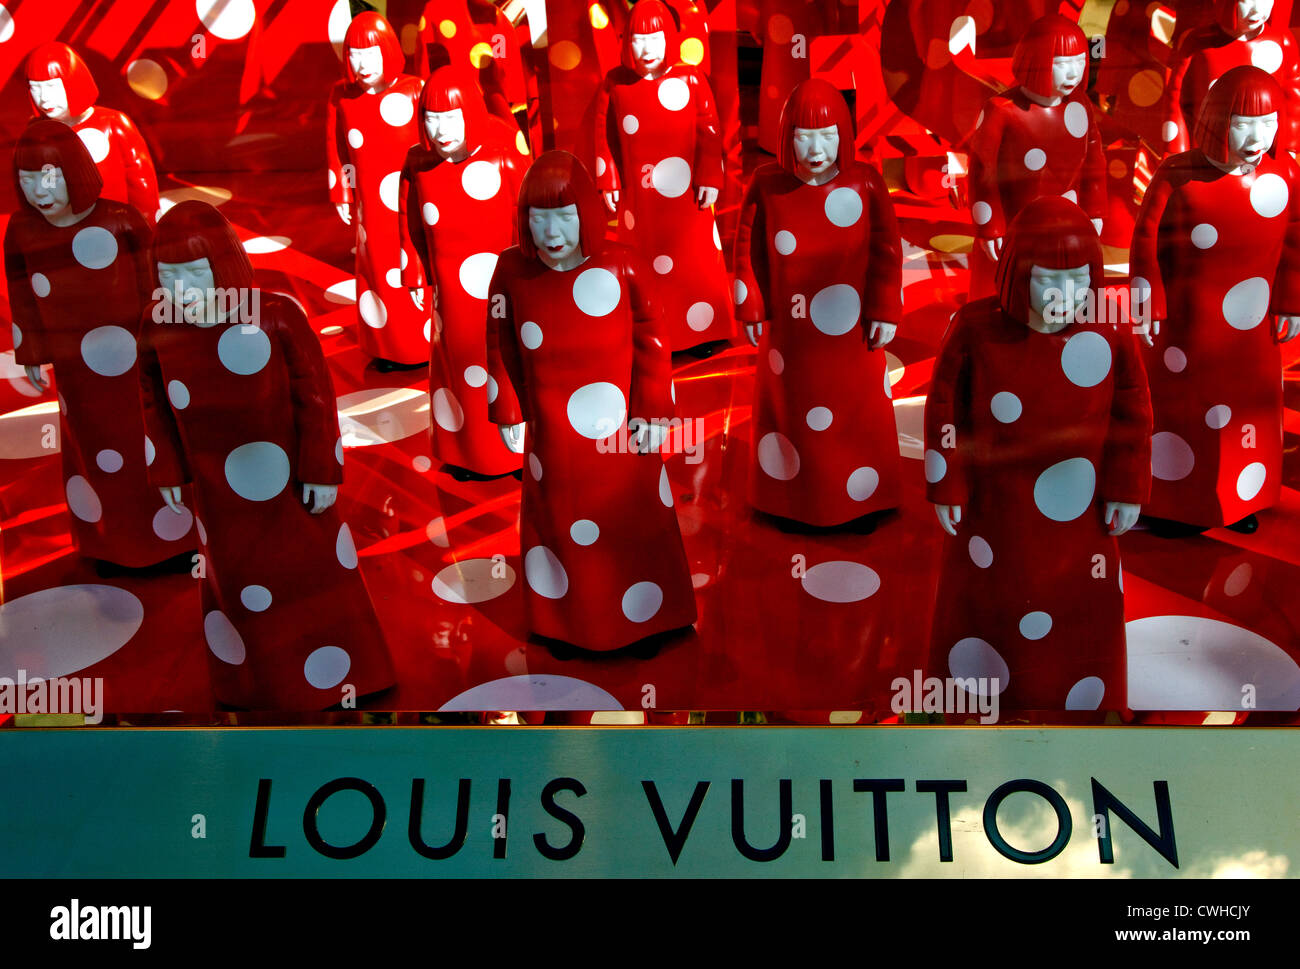 Yayoi Kusama x Louis Vuitton at Harrods [PHOTOS] – WWD